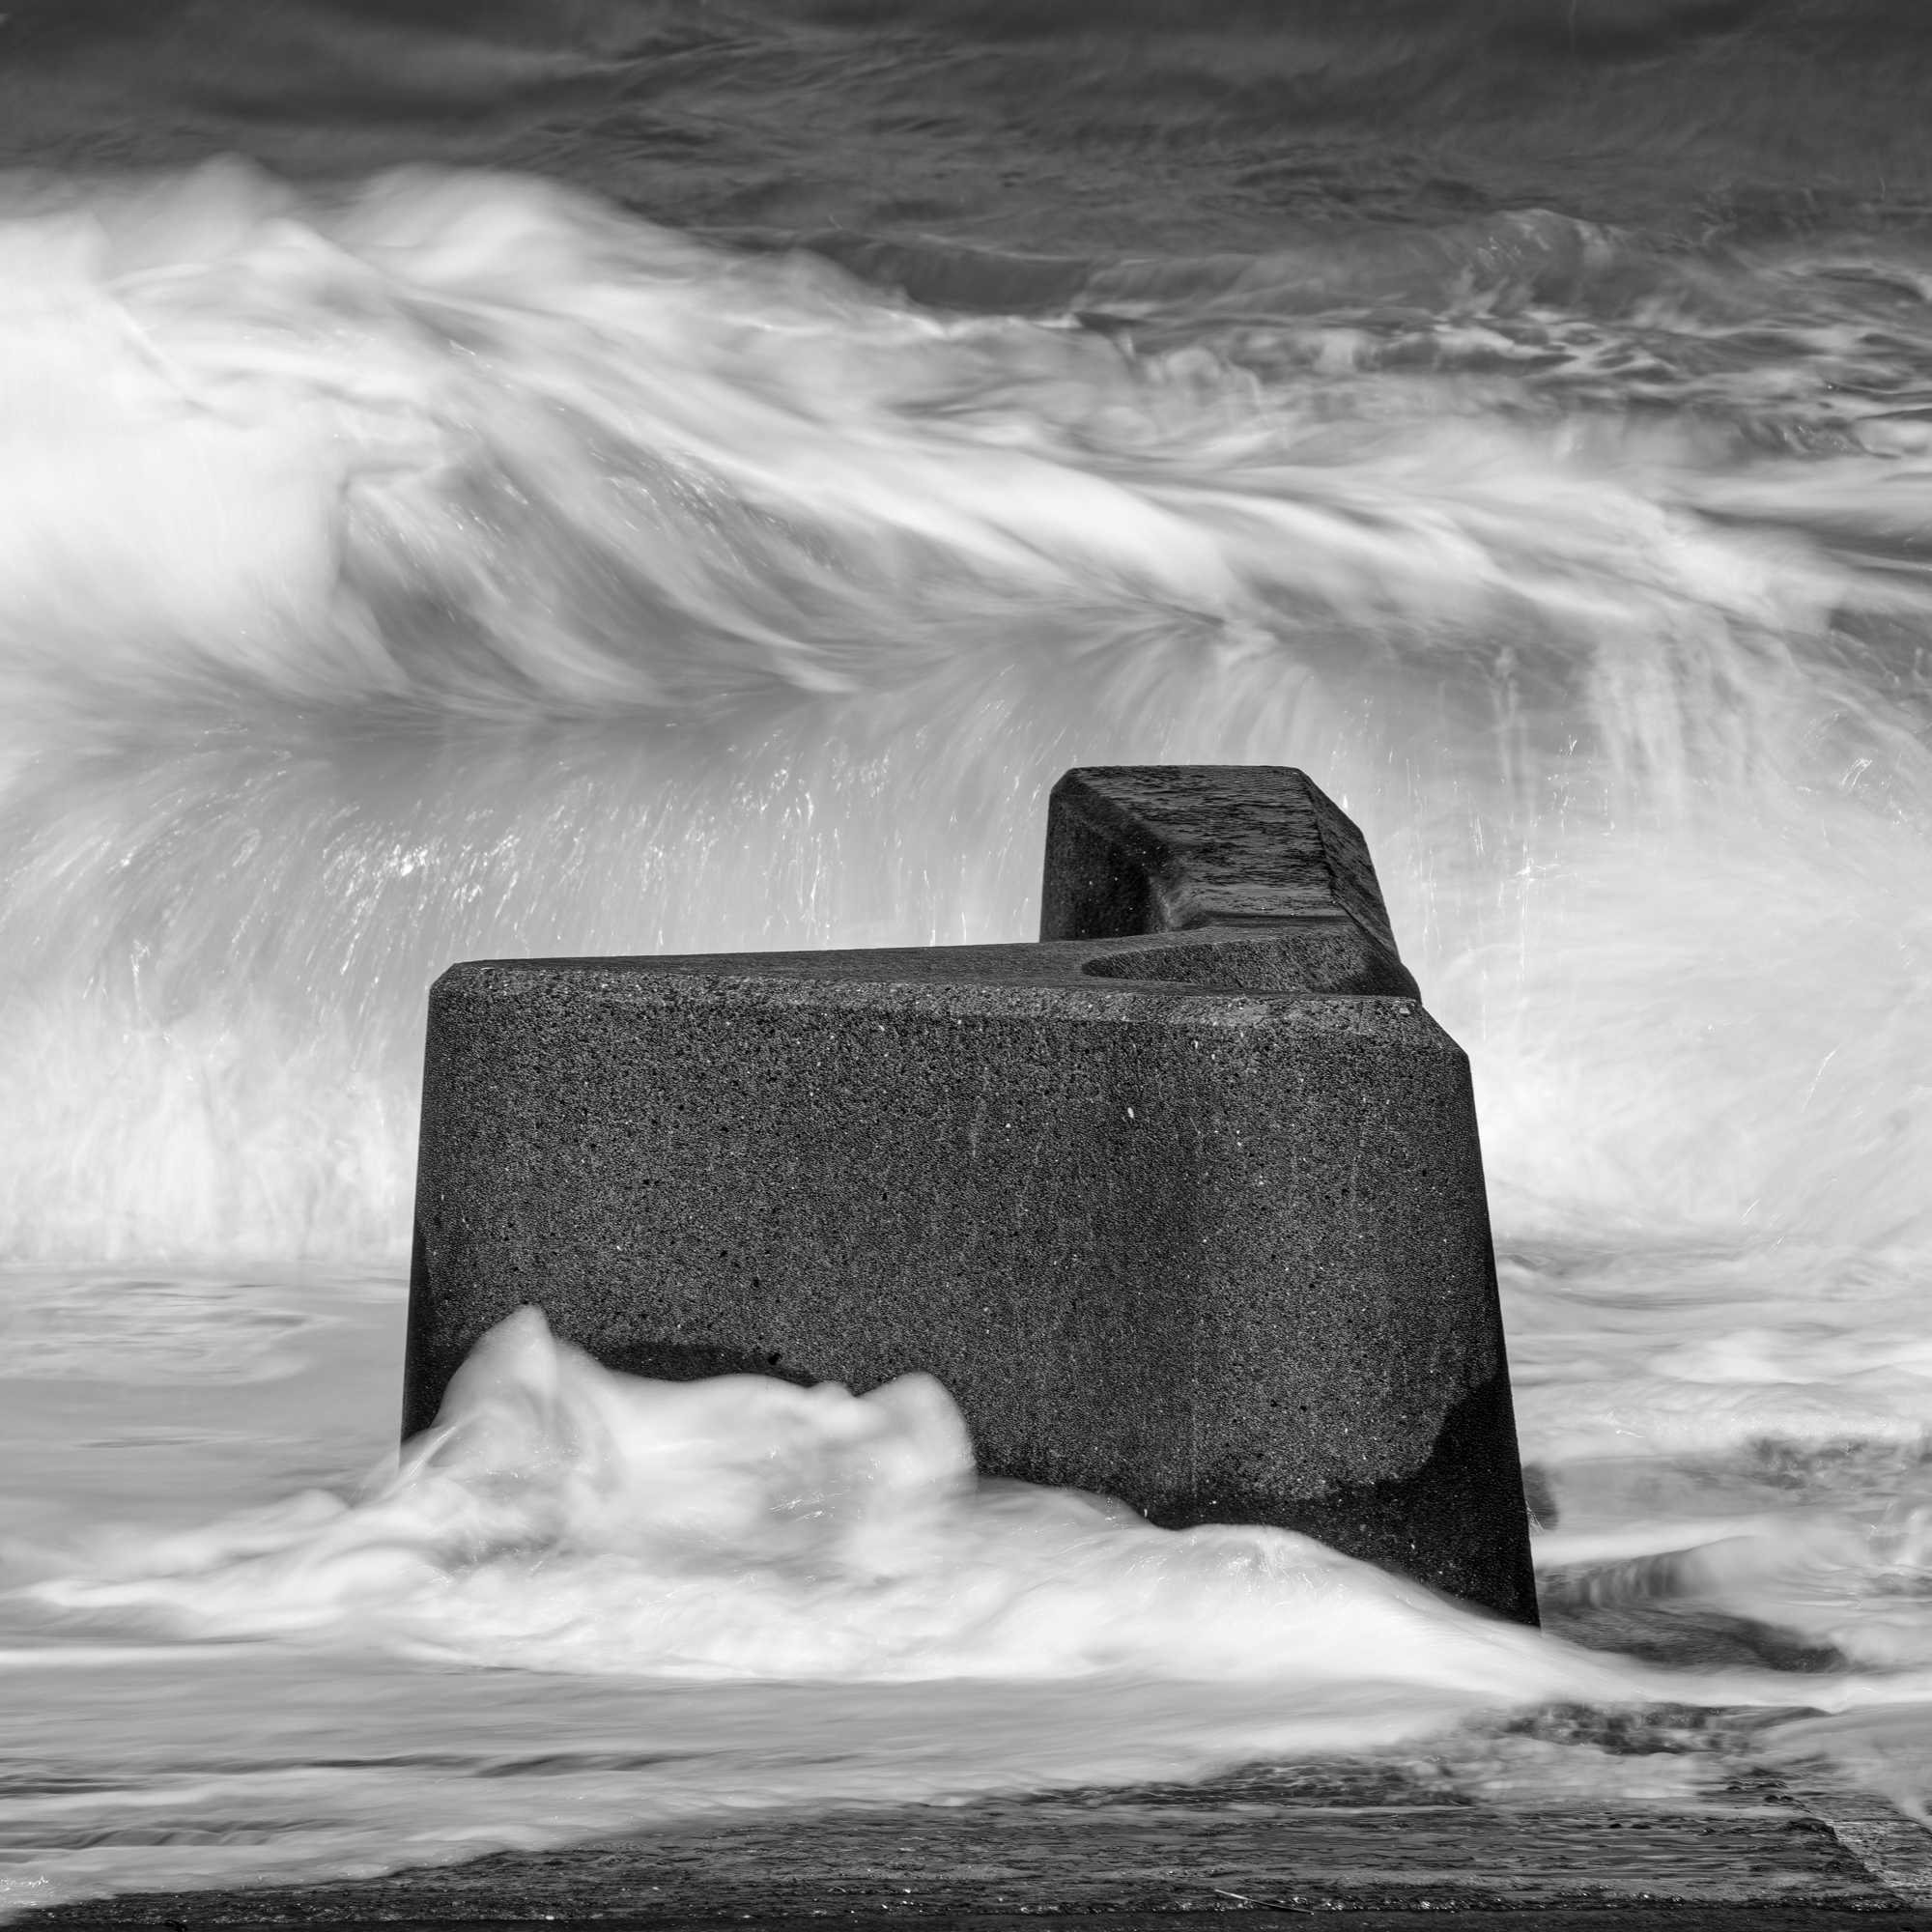 Leasowe beach sea defences taken with 15 second exposure